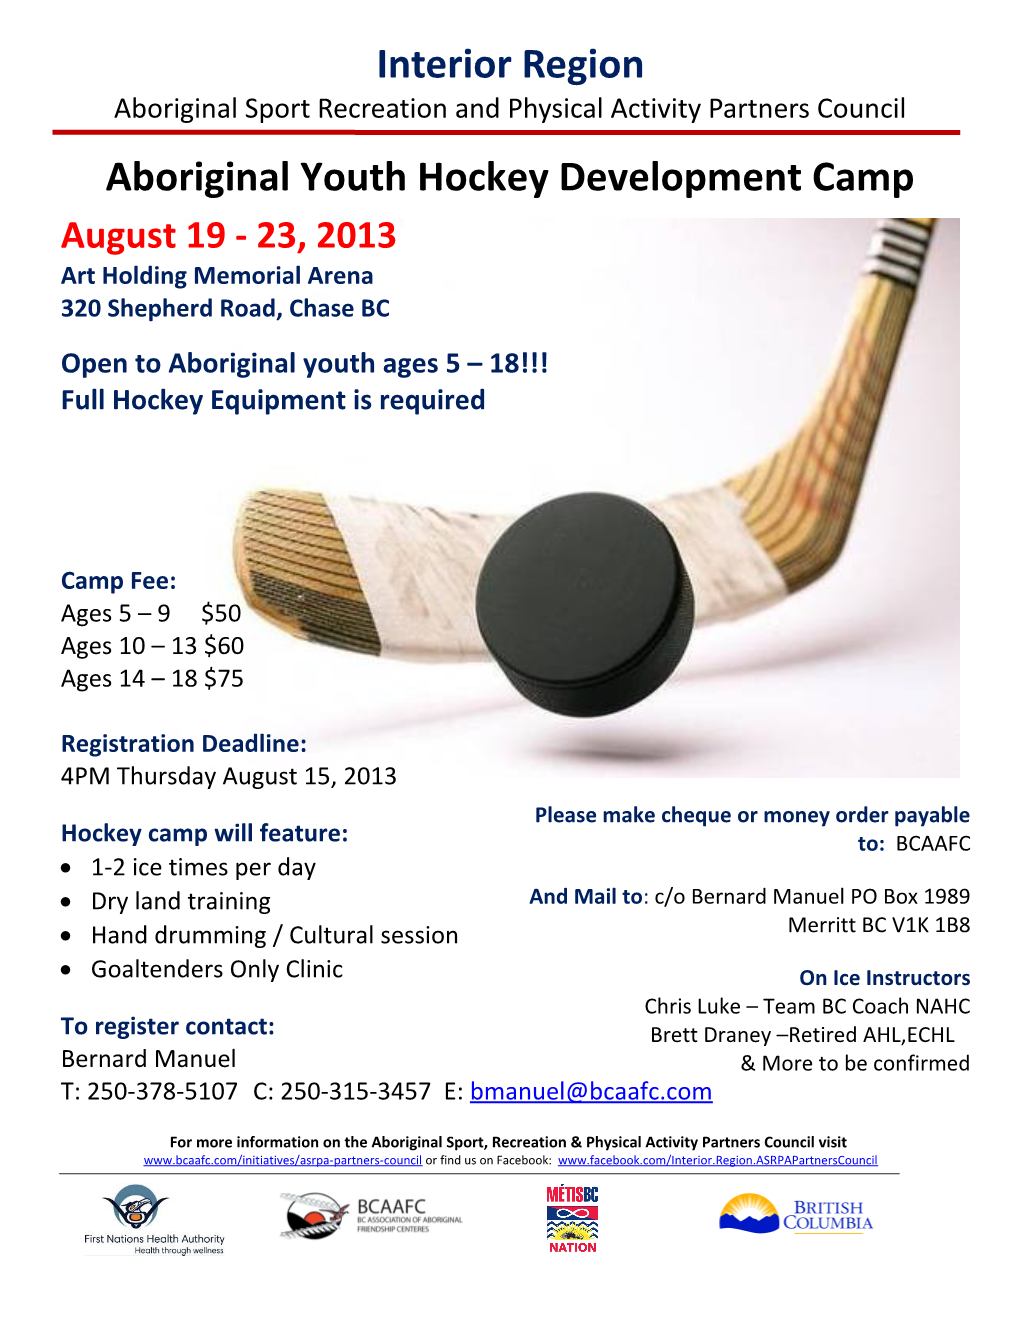 Aboriginal Youth Hockey Development Camp